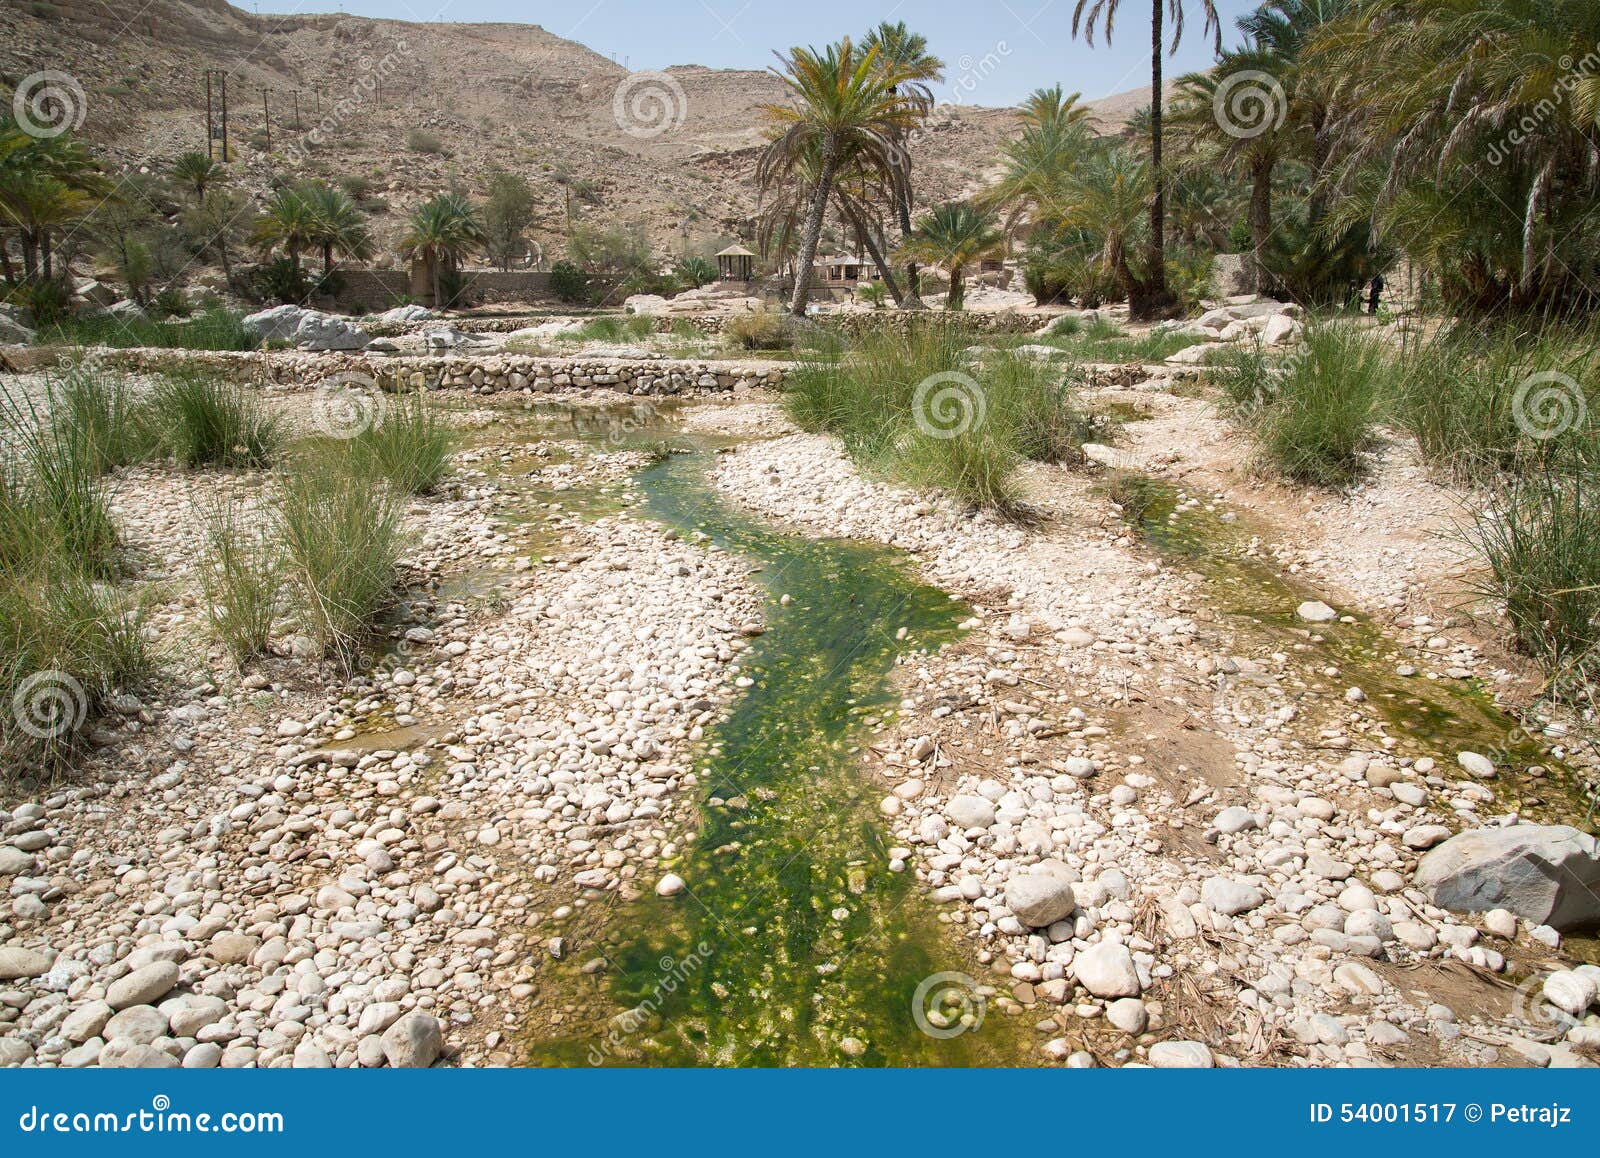 palms in wadi bani khalid